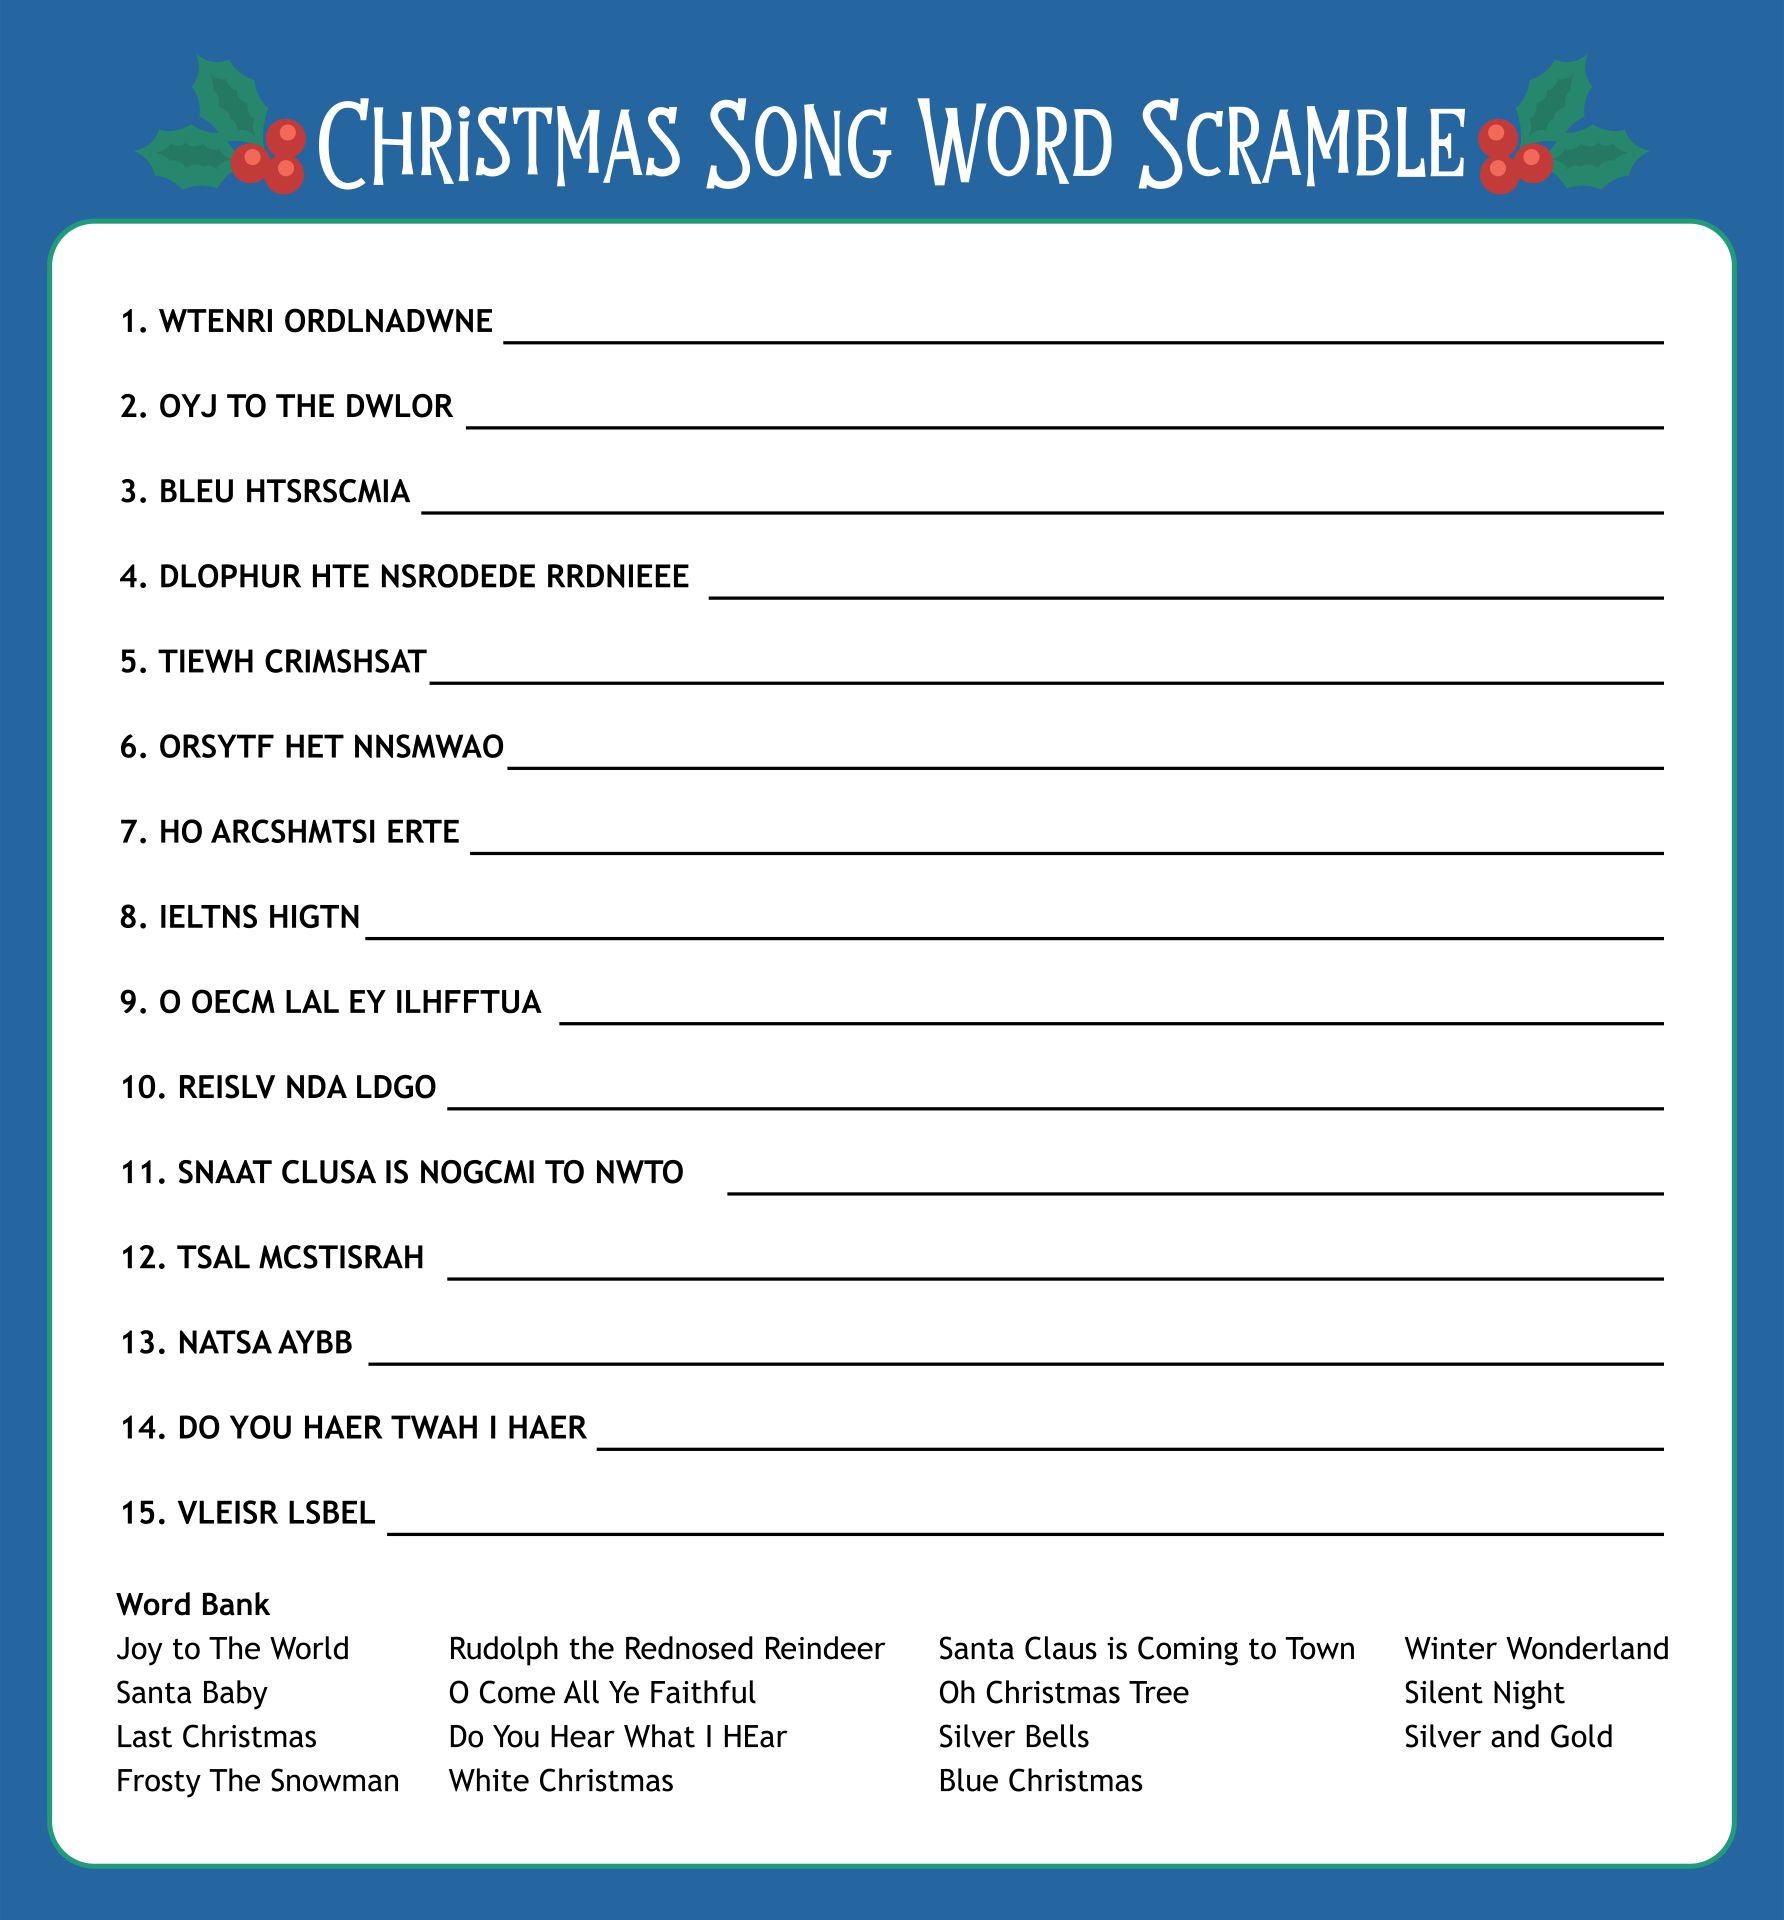 Christmas Song Scramble For Classroom Activity